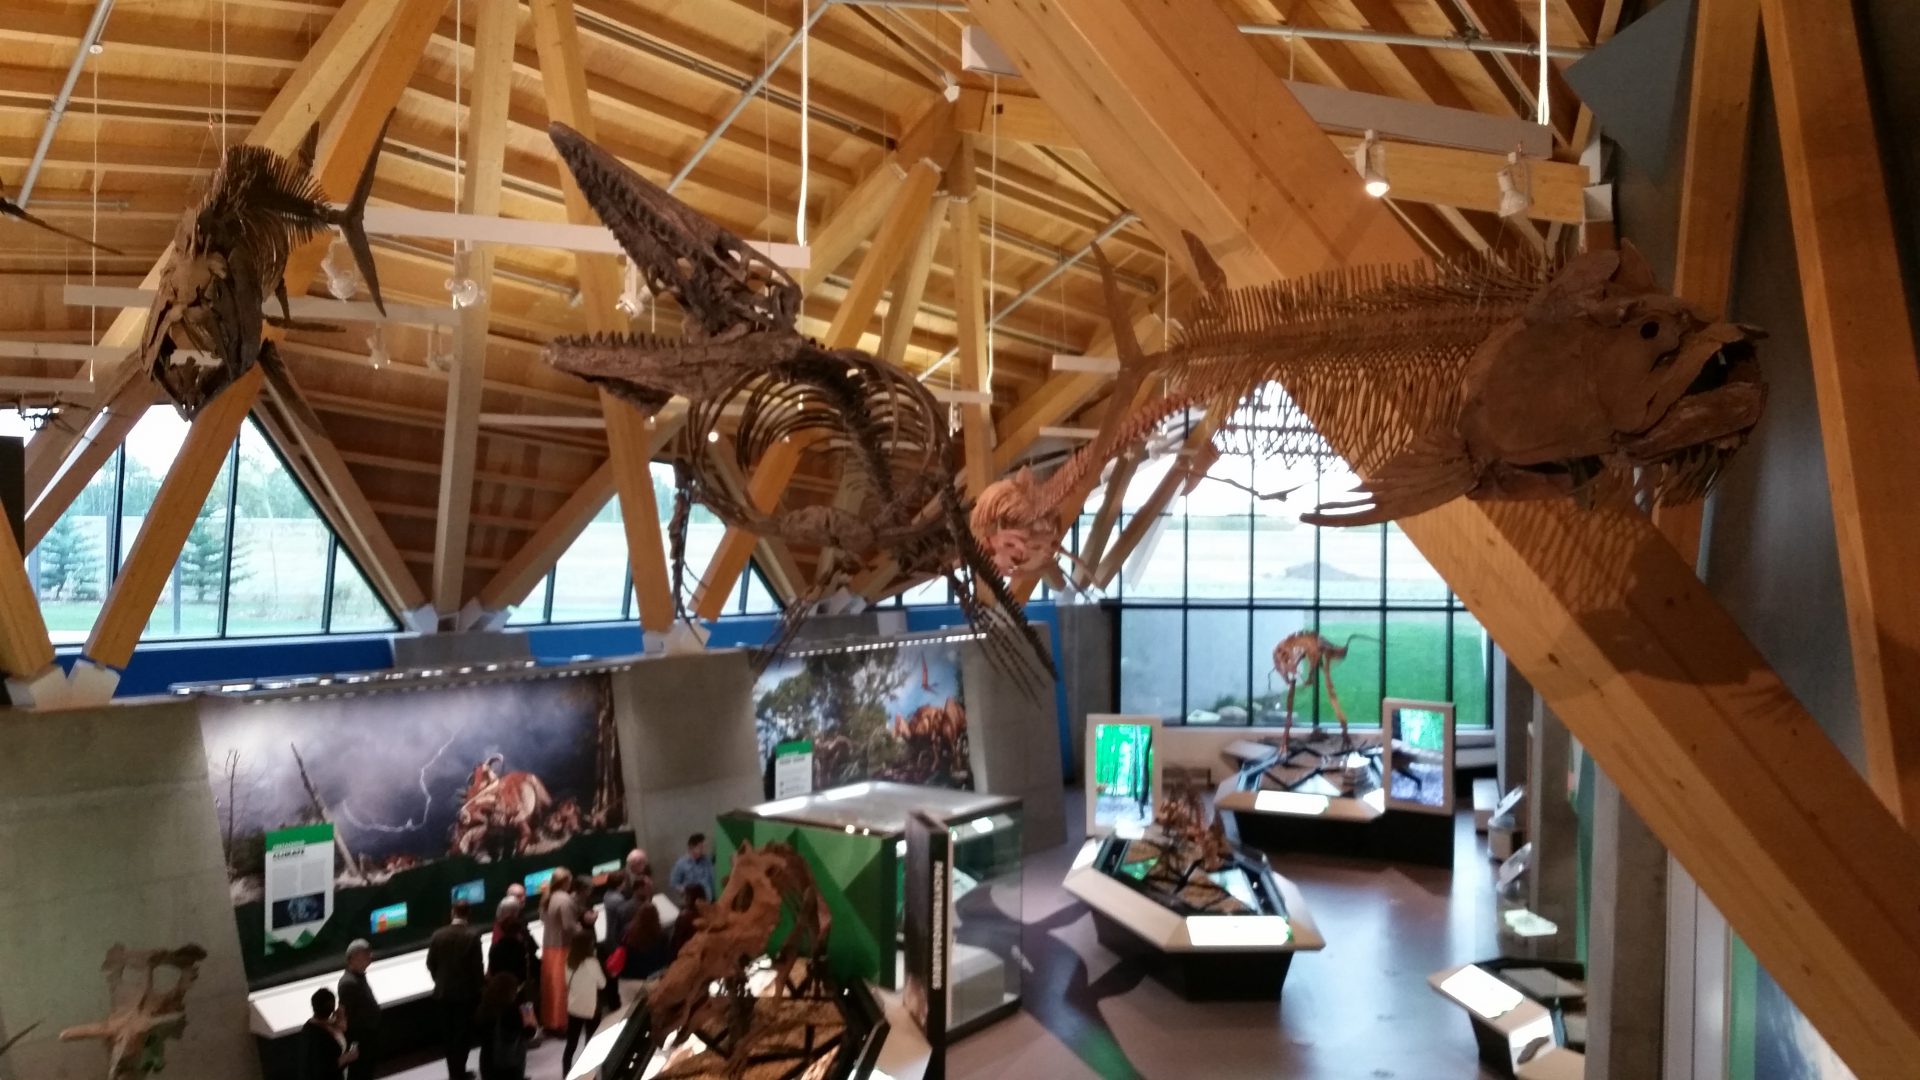 Activities planned at dinosaur museum to honour Al Lakusta